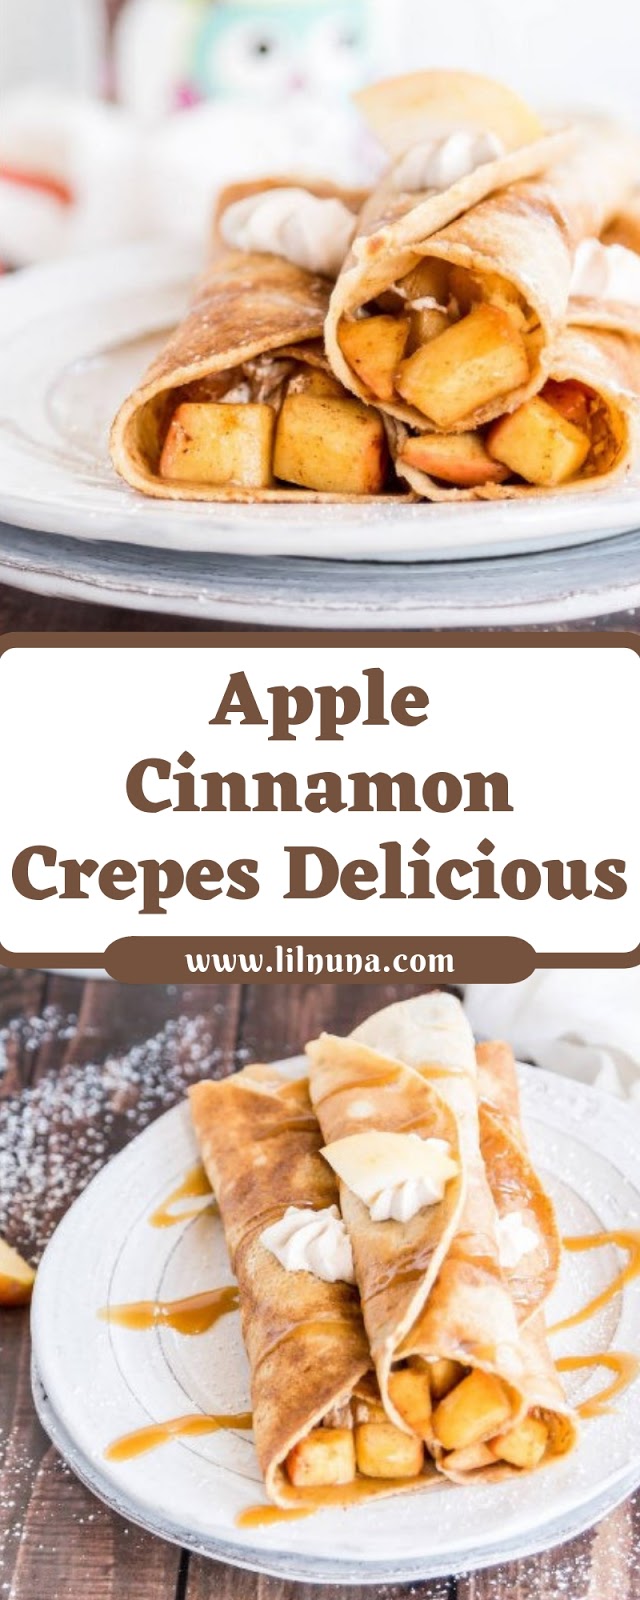 Apple Cinnamon Crepes Delicious